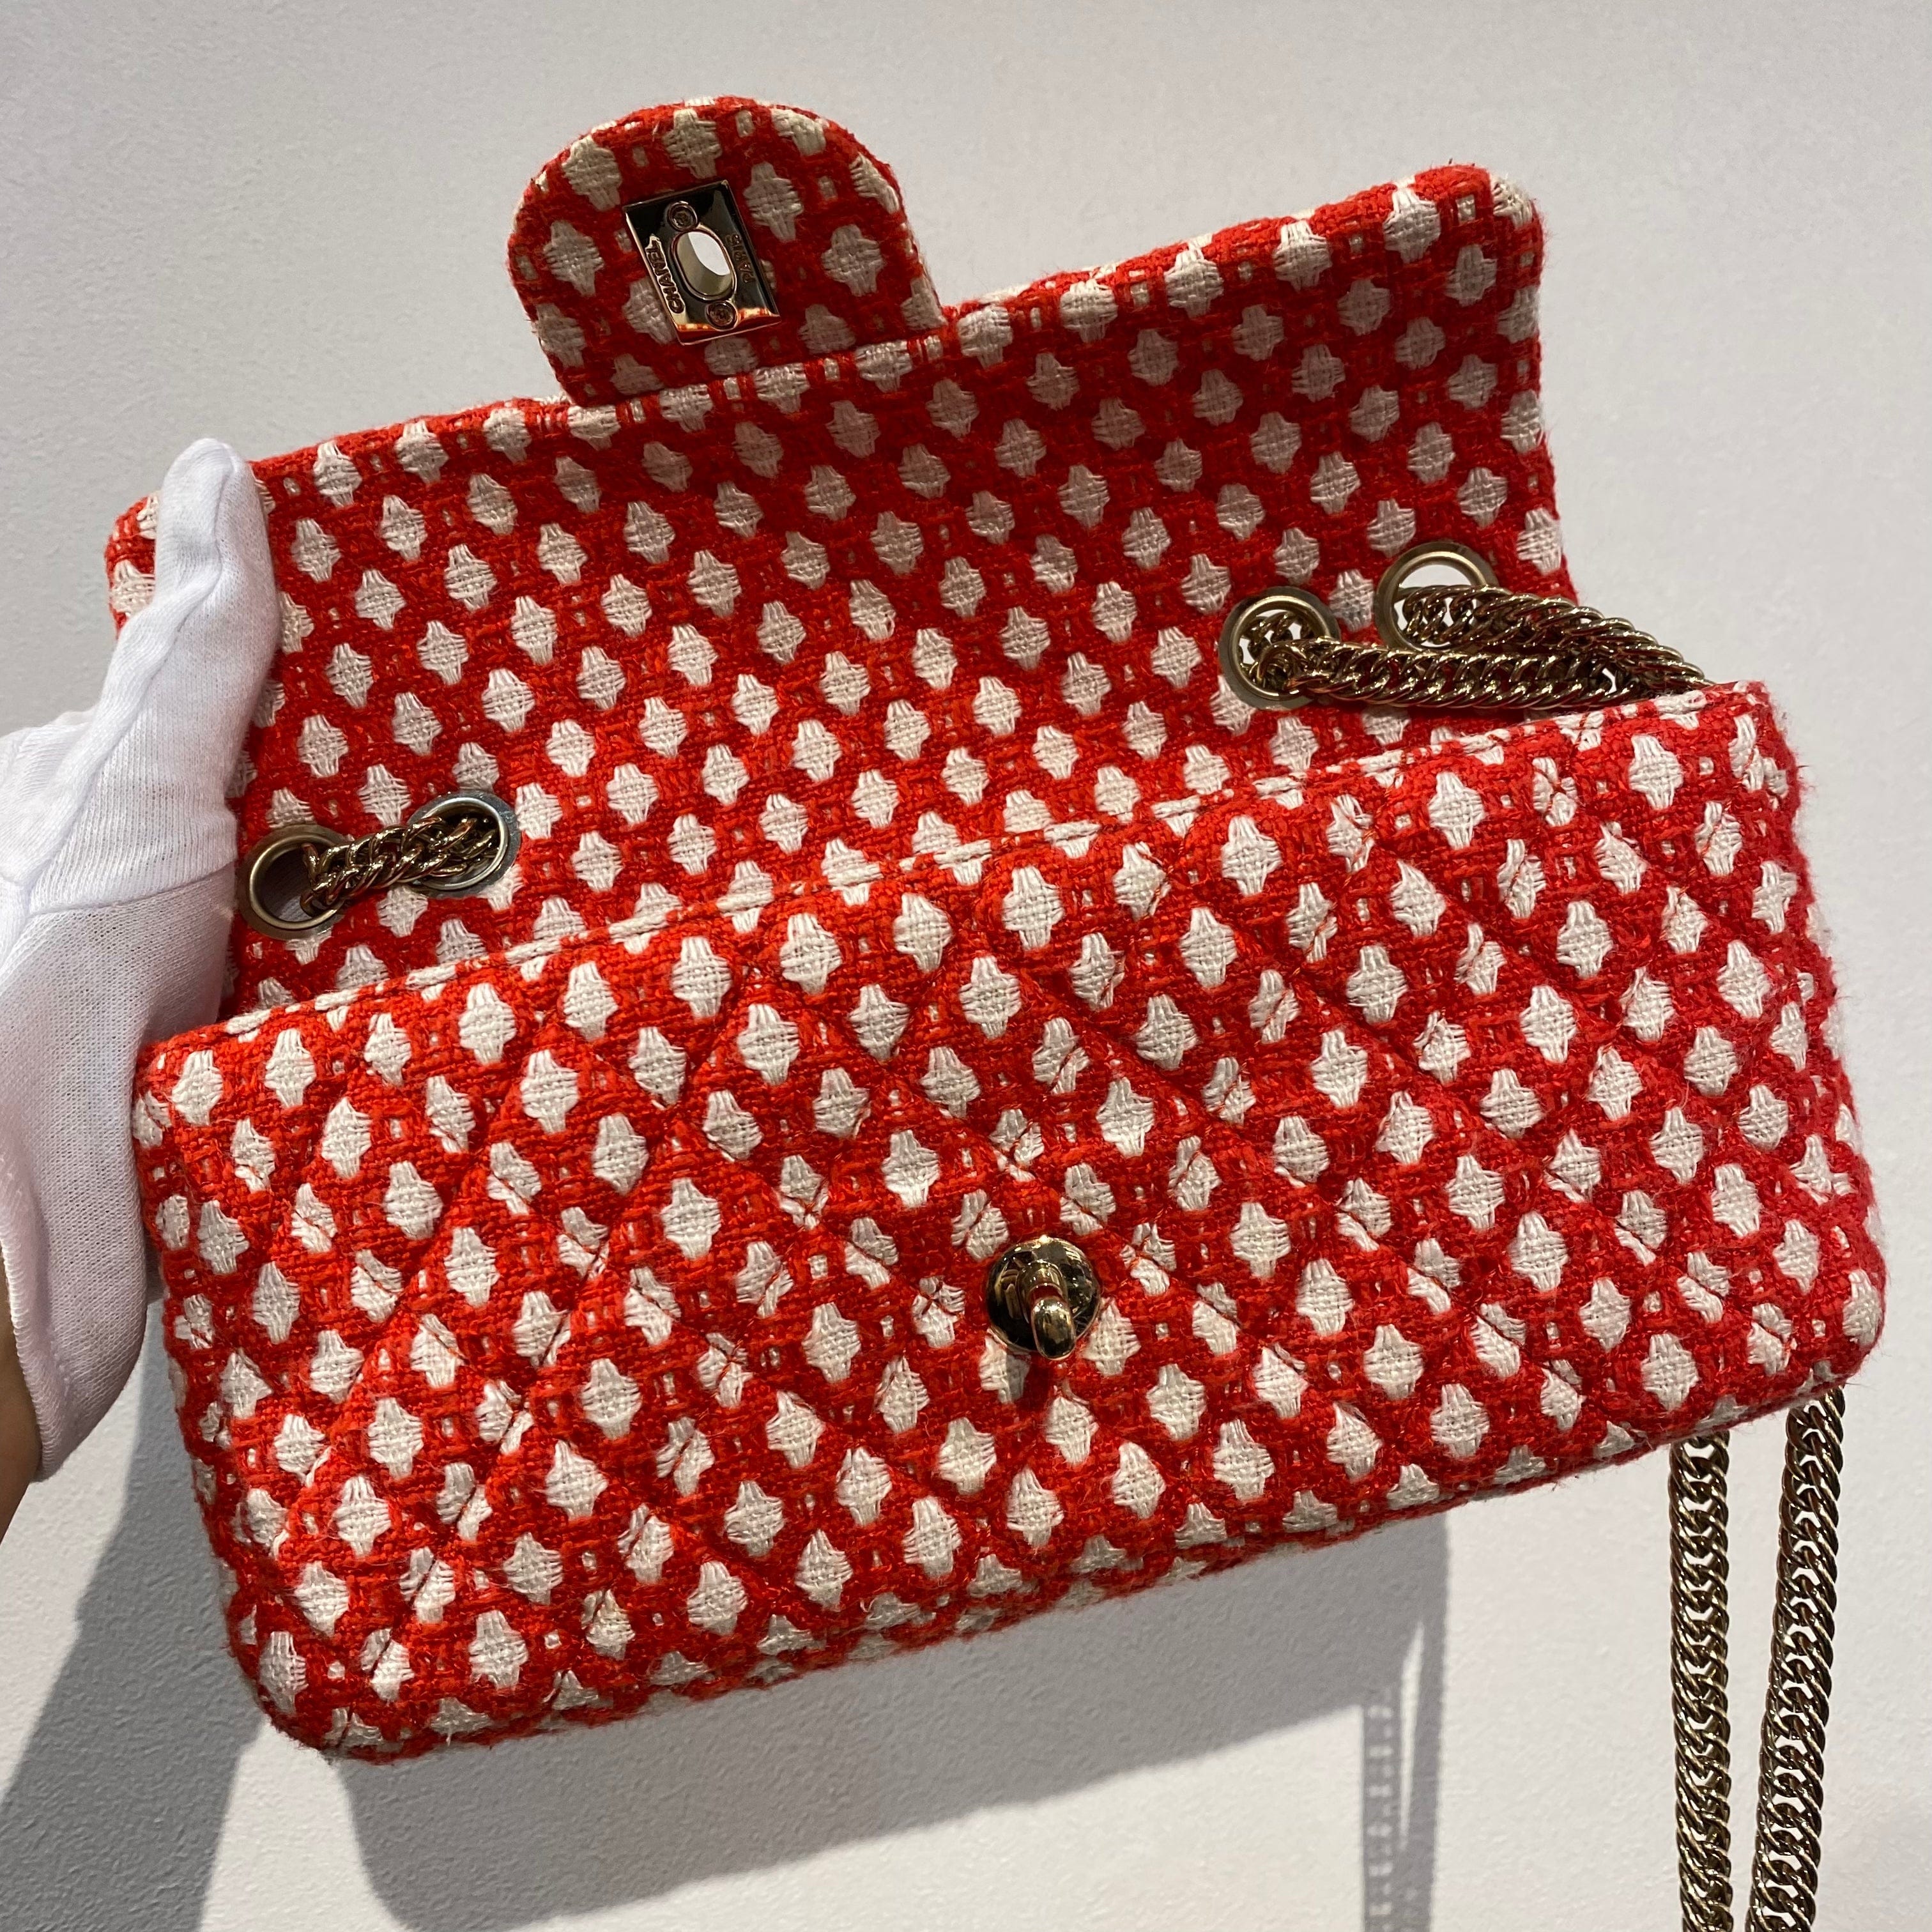 Chanel CHANEL VINTAGE EAST WEST CHAIN SHOULDER BAG RED WHITE CANVAS 90210993